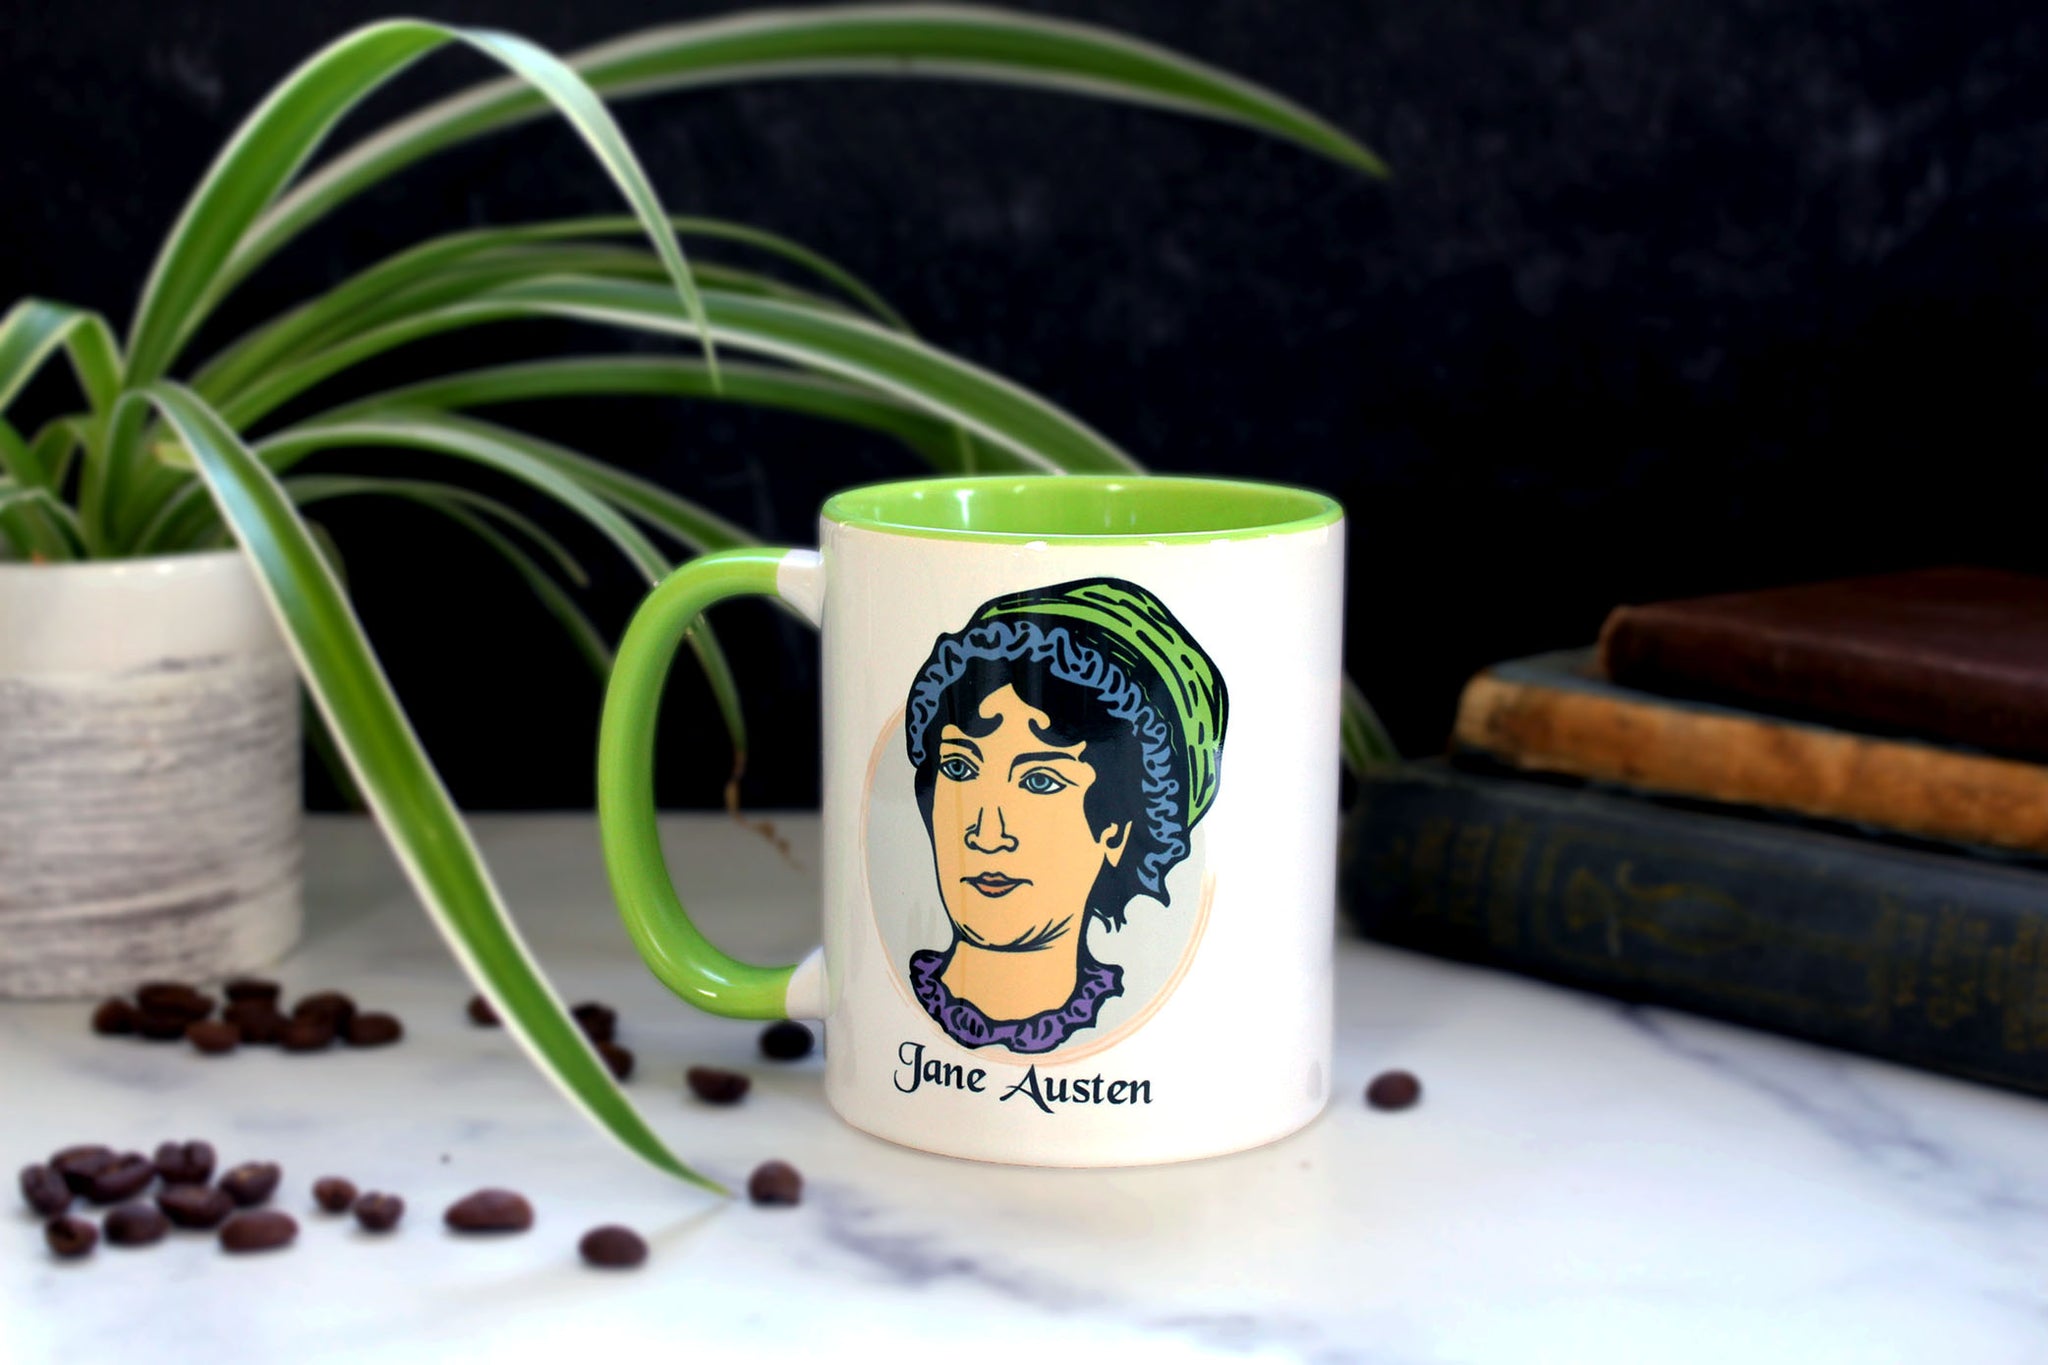 The Jane Austen Mug